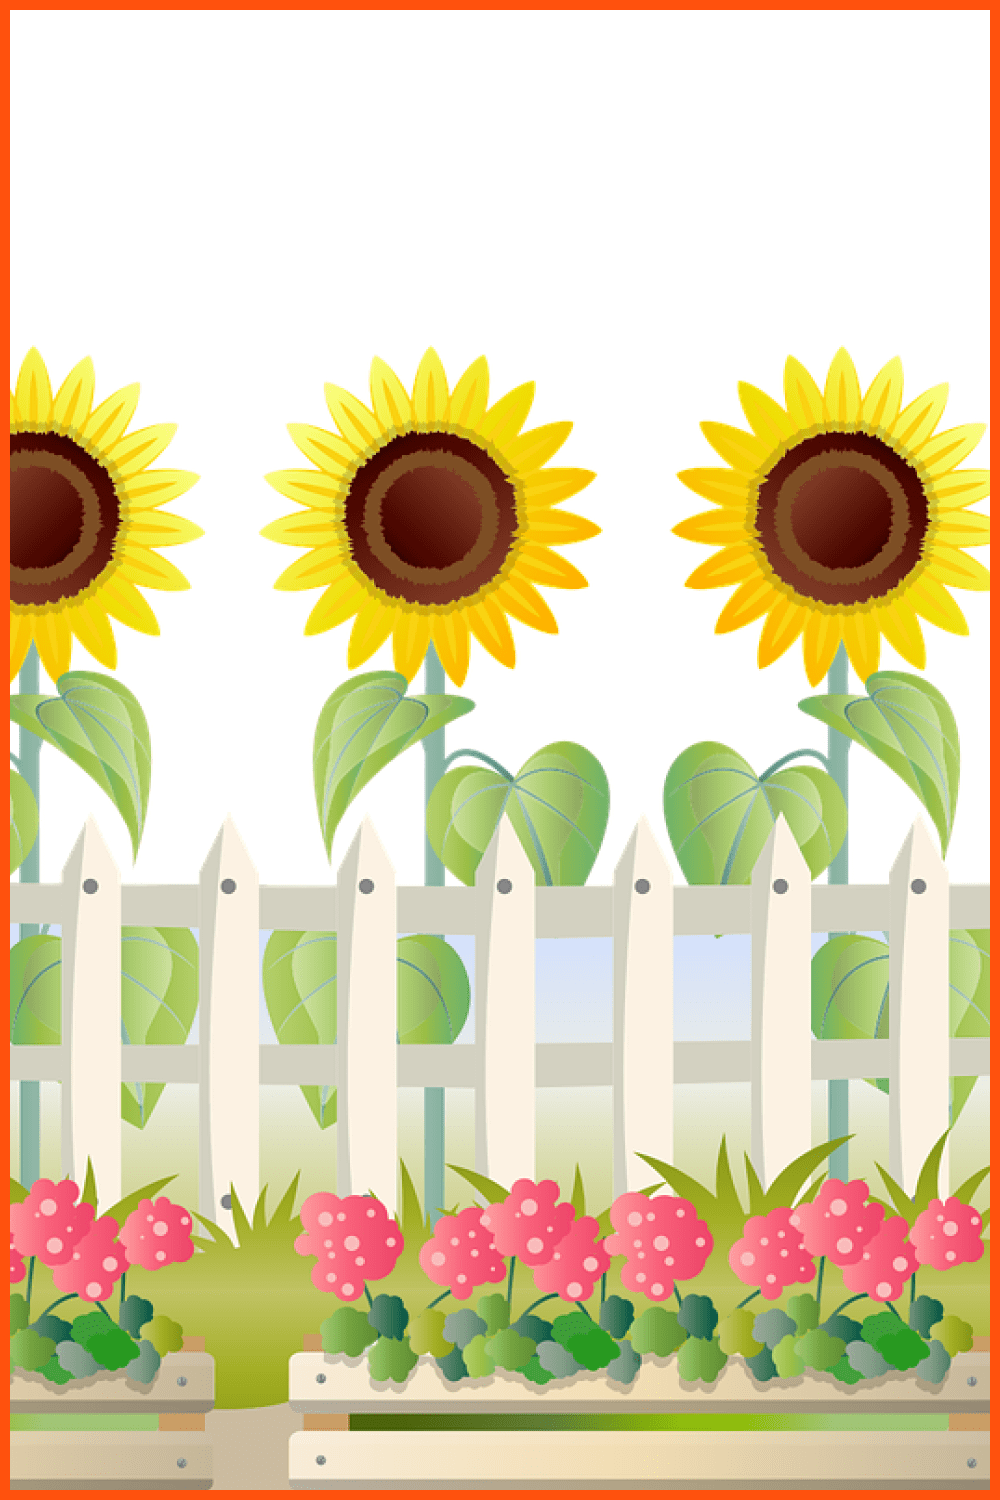 Sunflower Geranium Flower - Free vector graphic on Pixabay.